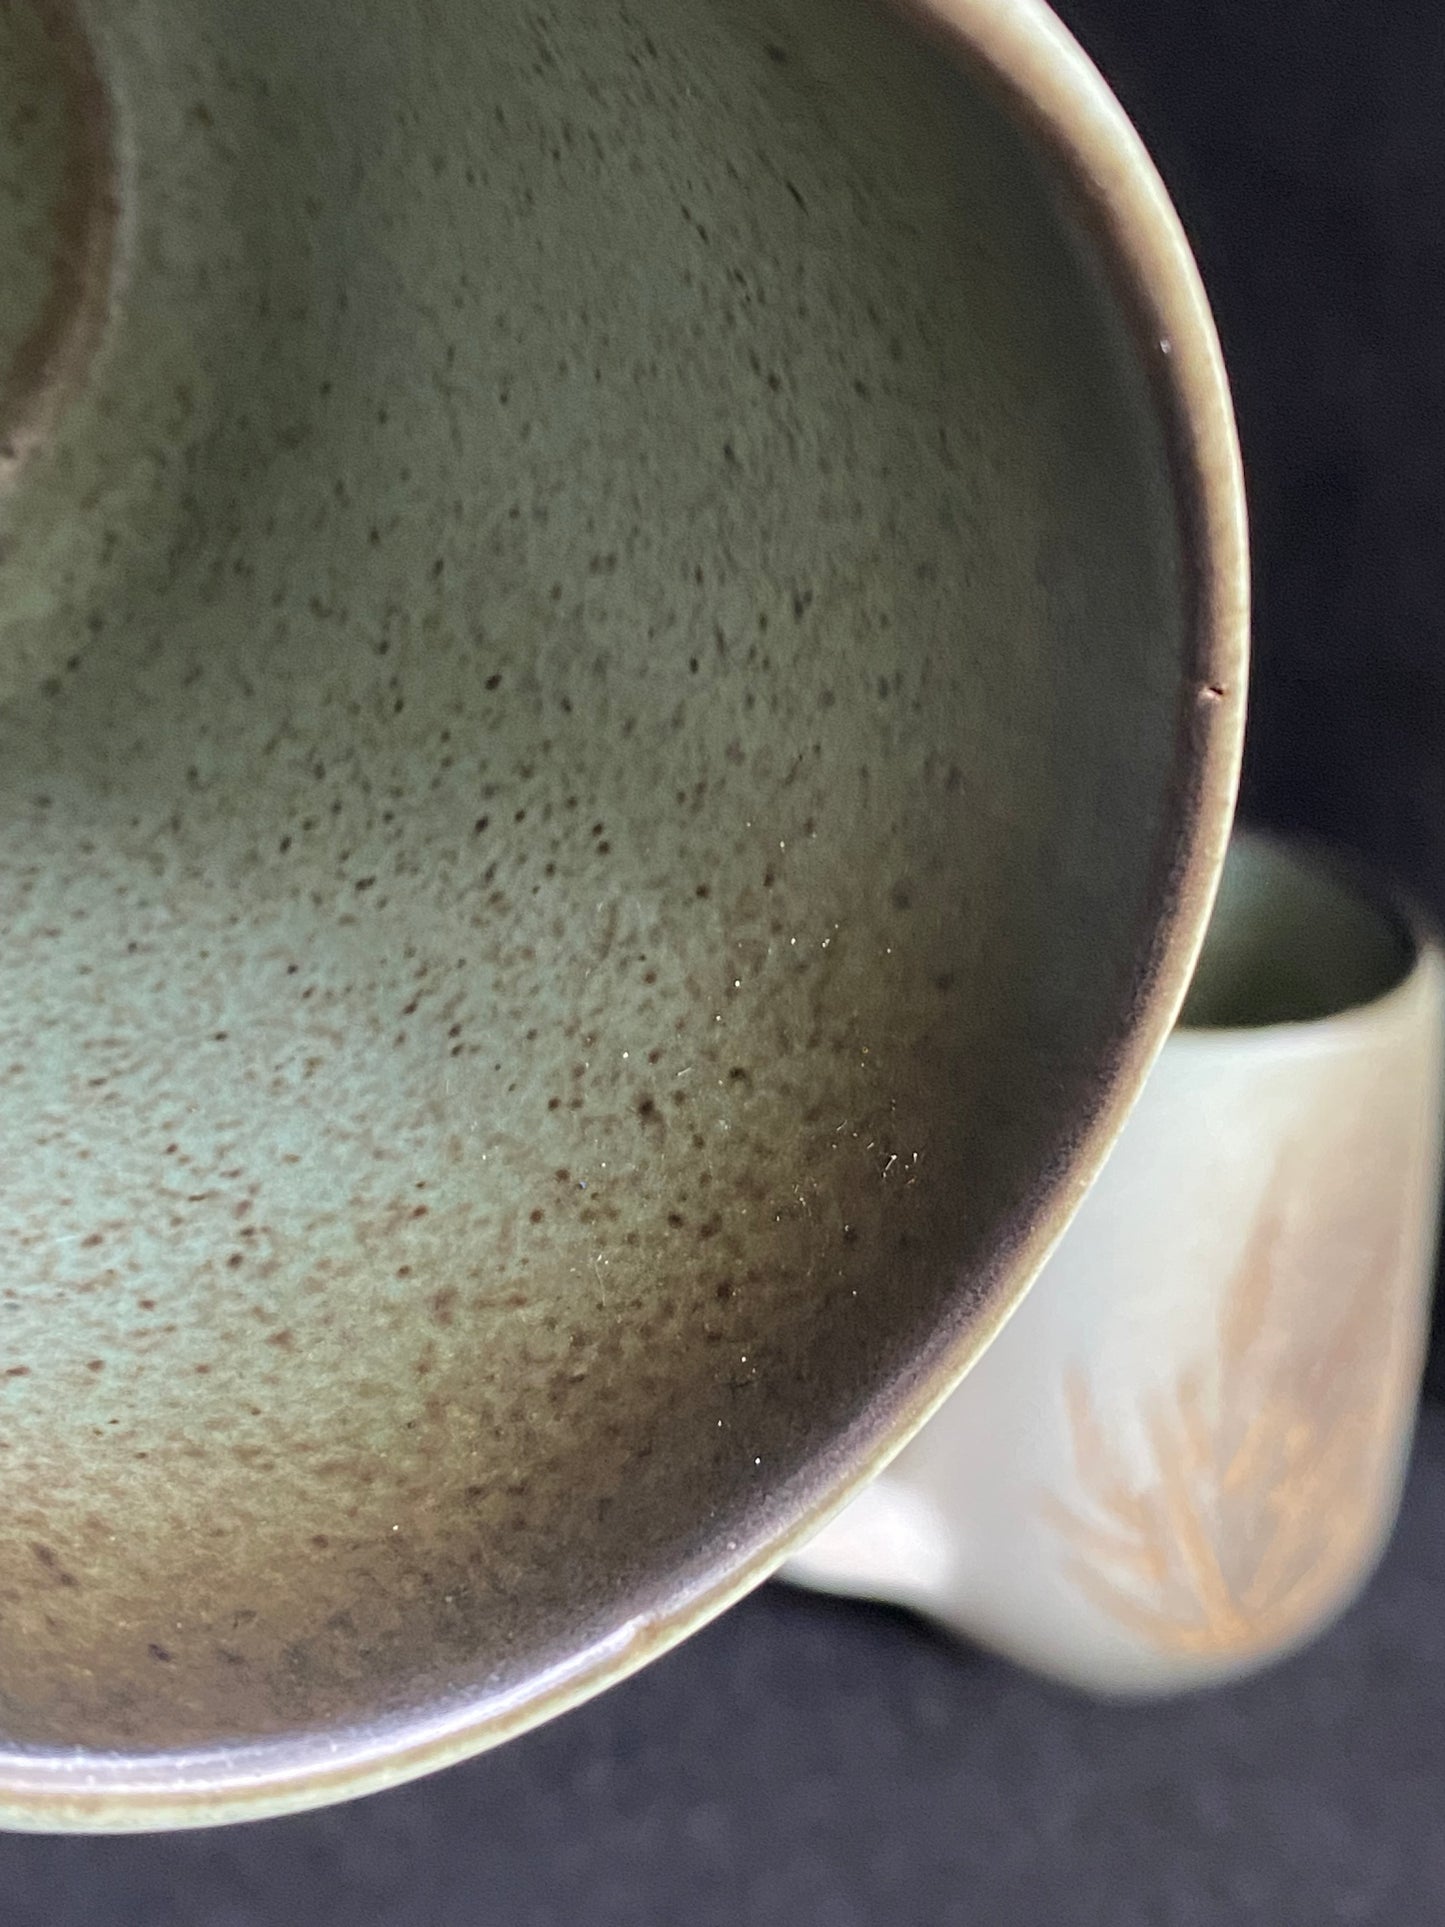 Ellis Pottery Australia mugs - Wheat design - Shape 231 - a fine pair